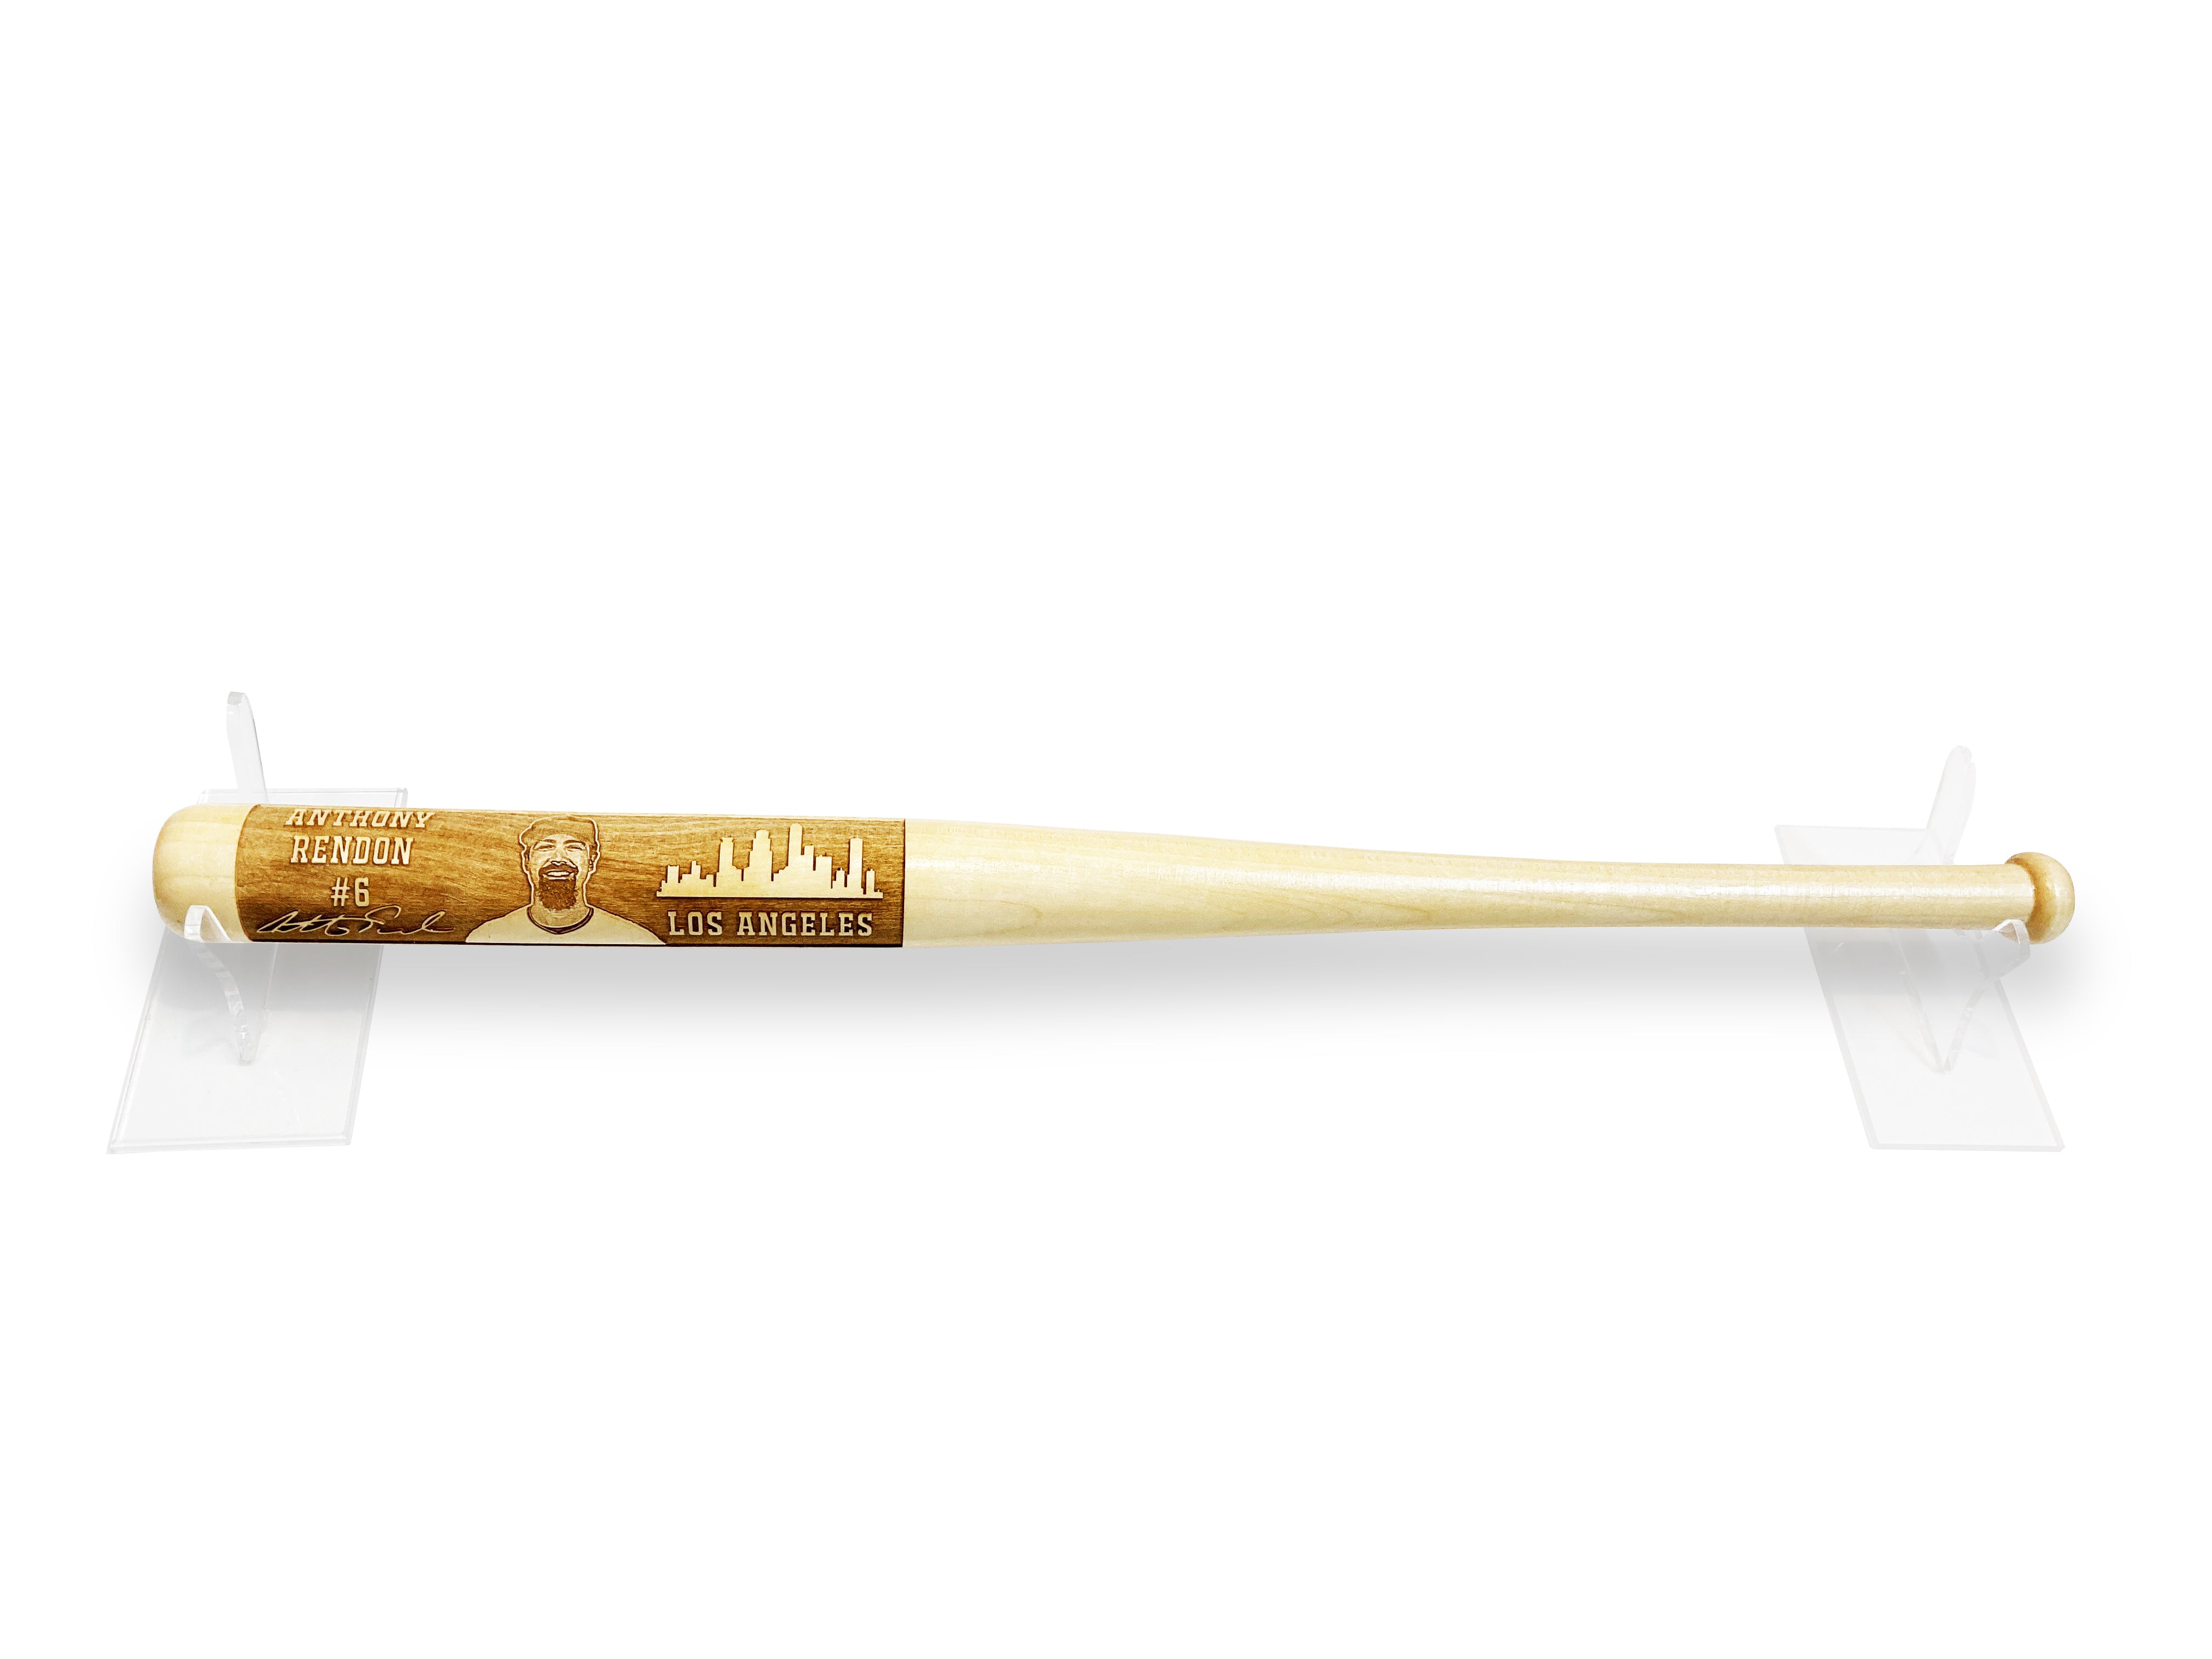 Anthony Rendon Laser-Engraved Wood Baseball Bat